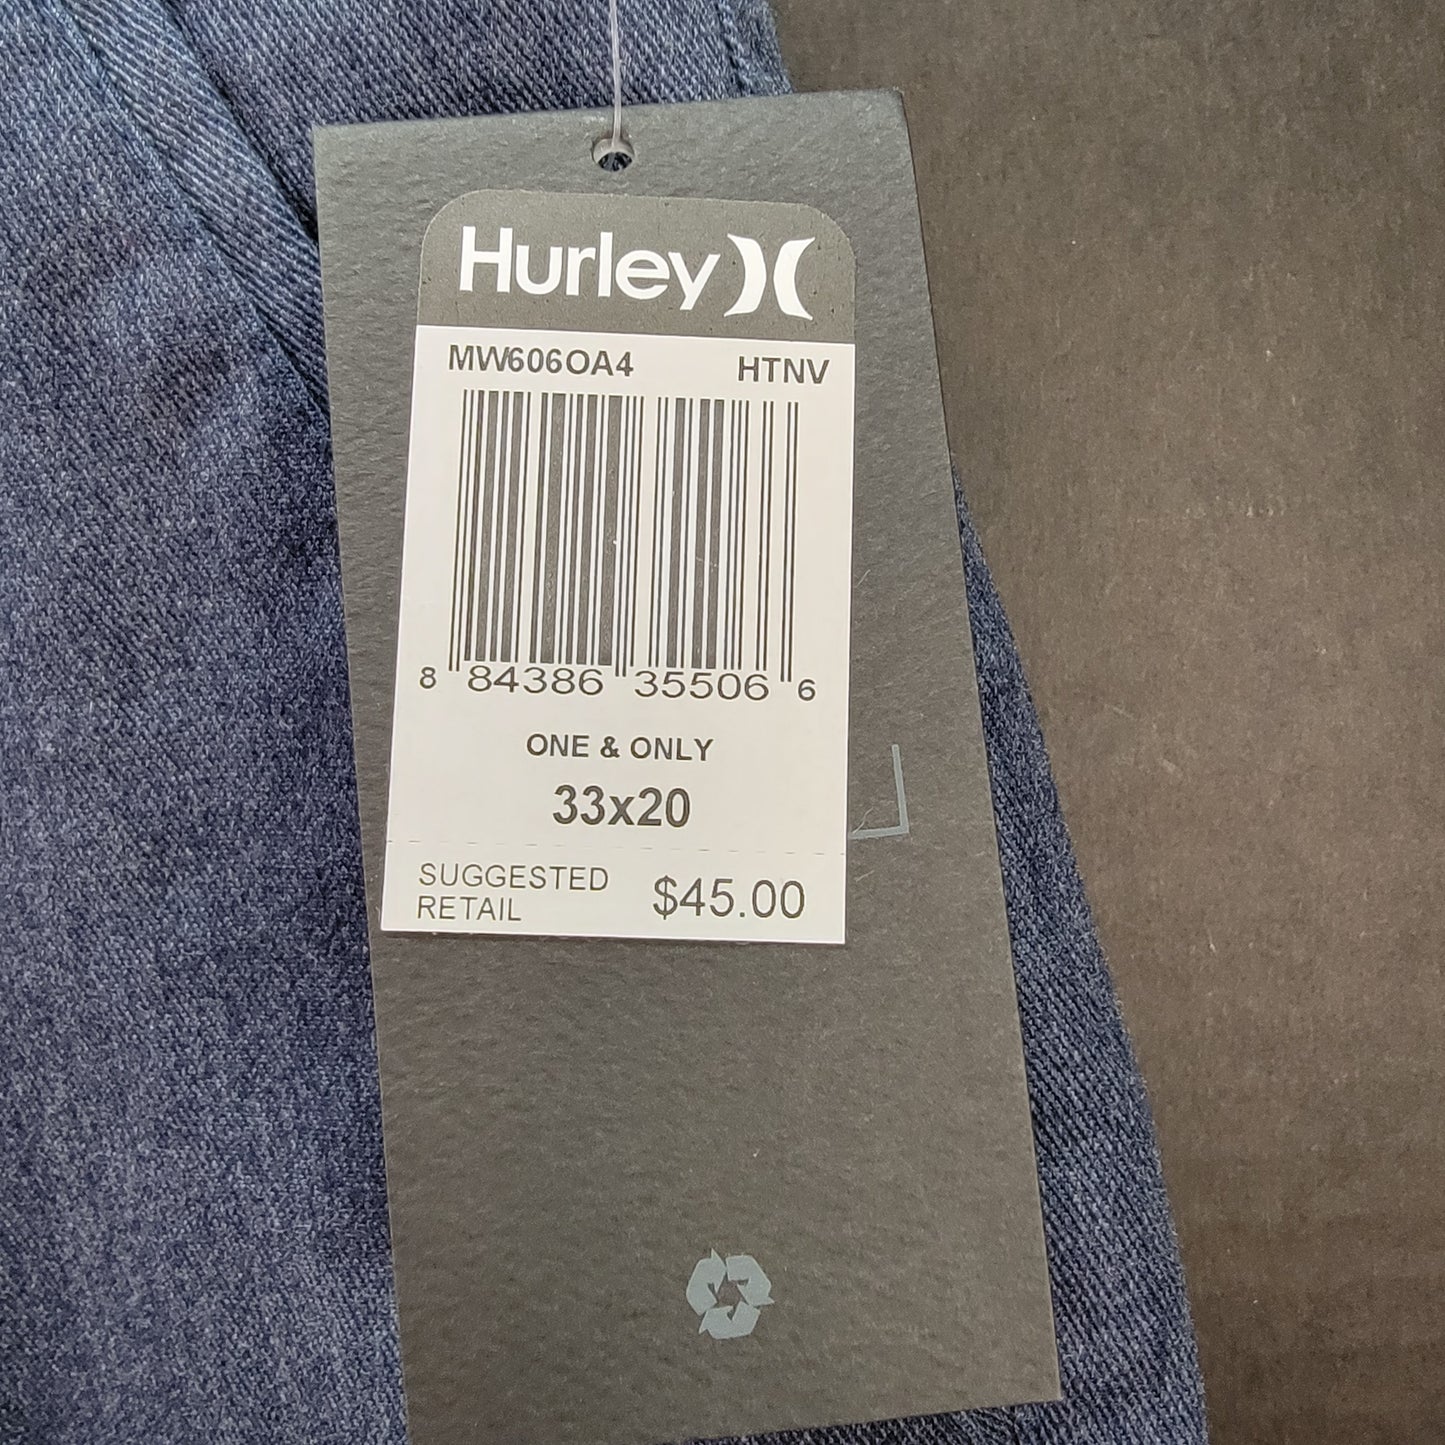 Hurley Men's Shorts Color Navy Blue Size 33X20 Retail $45